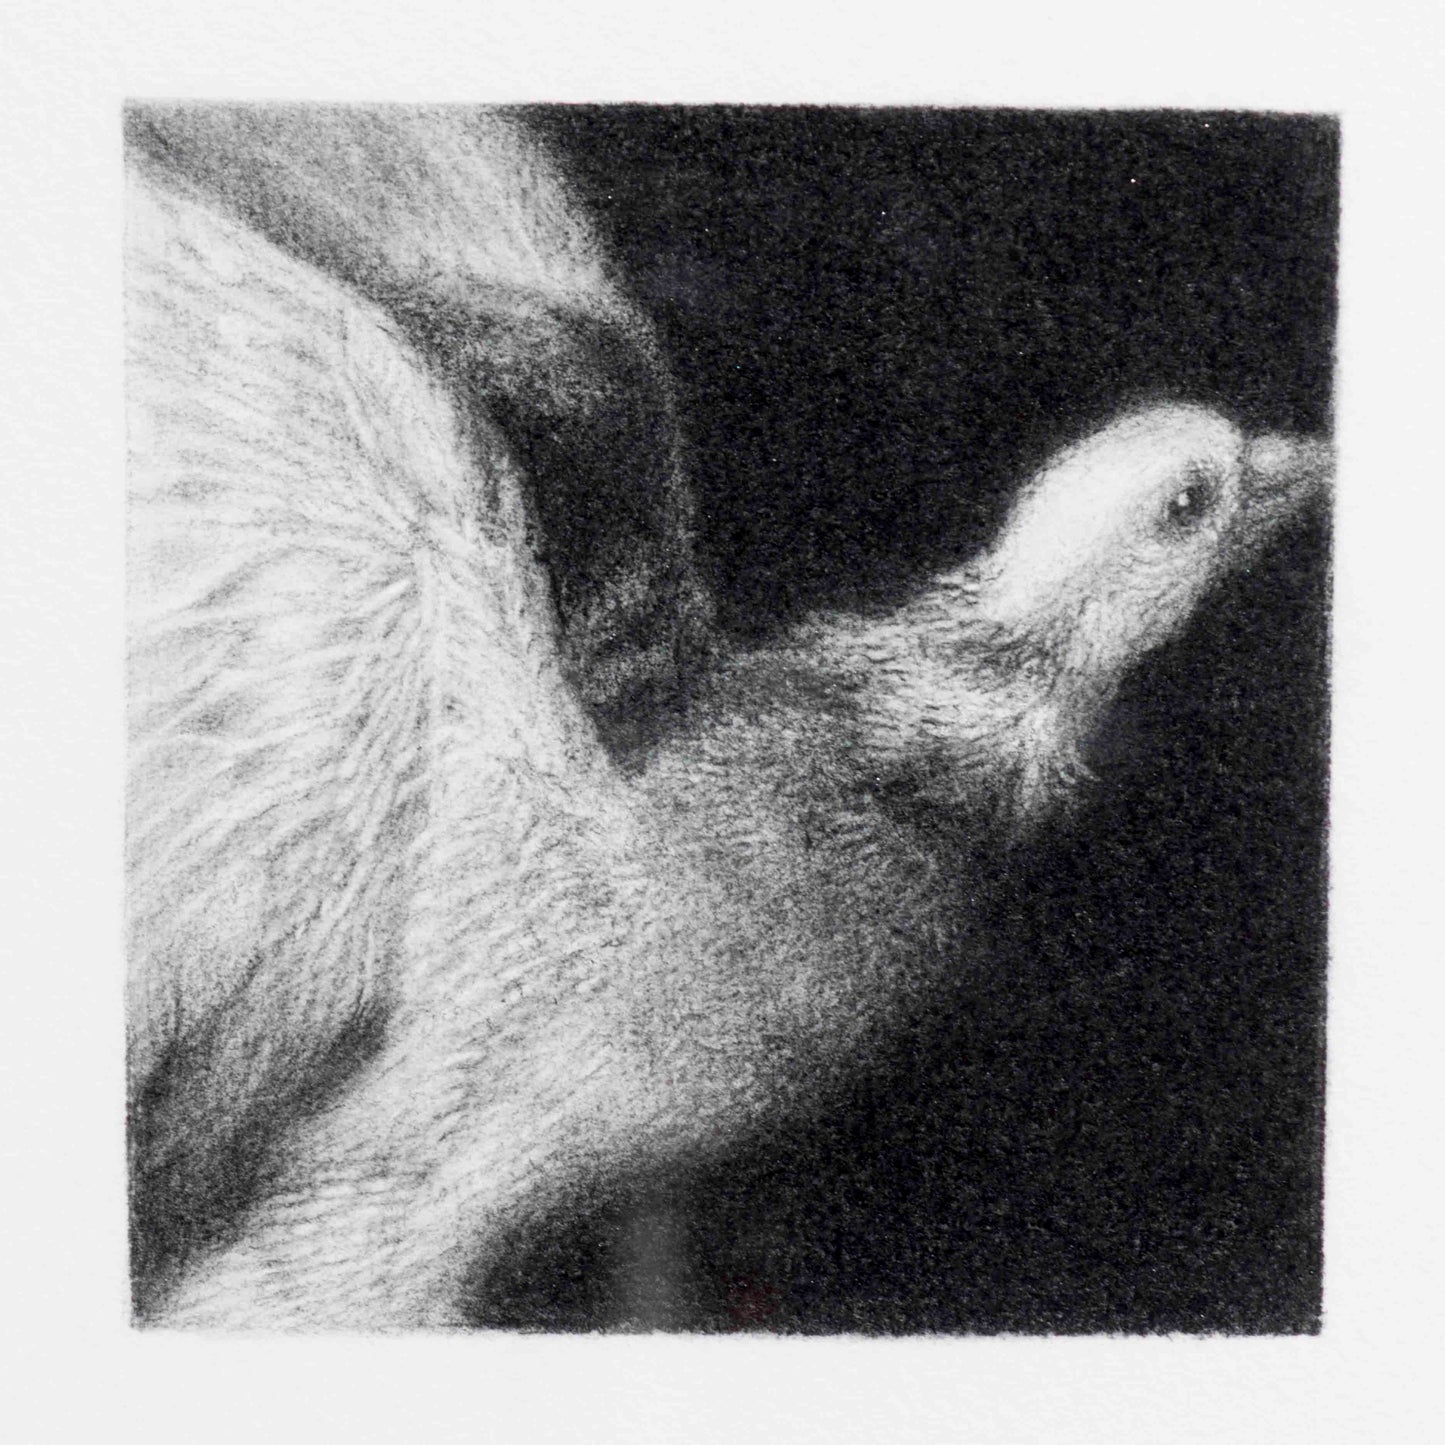 Dove taking flight – after Frans Snyders, 2018